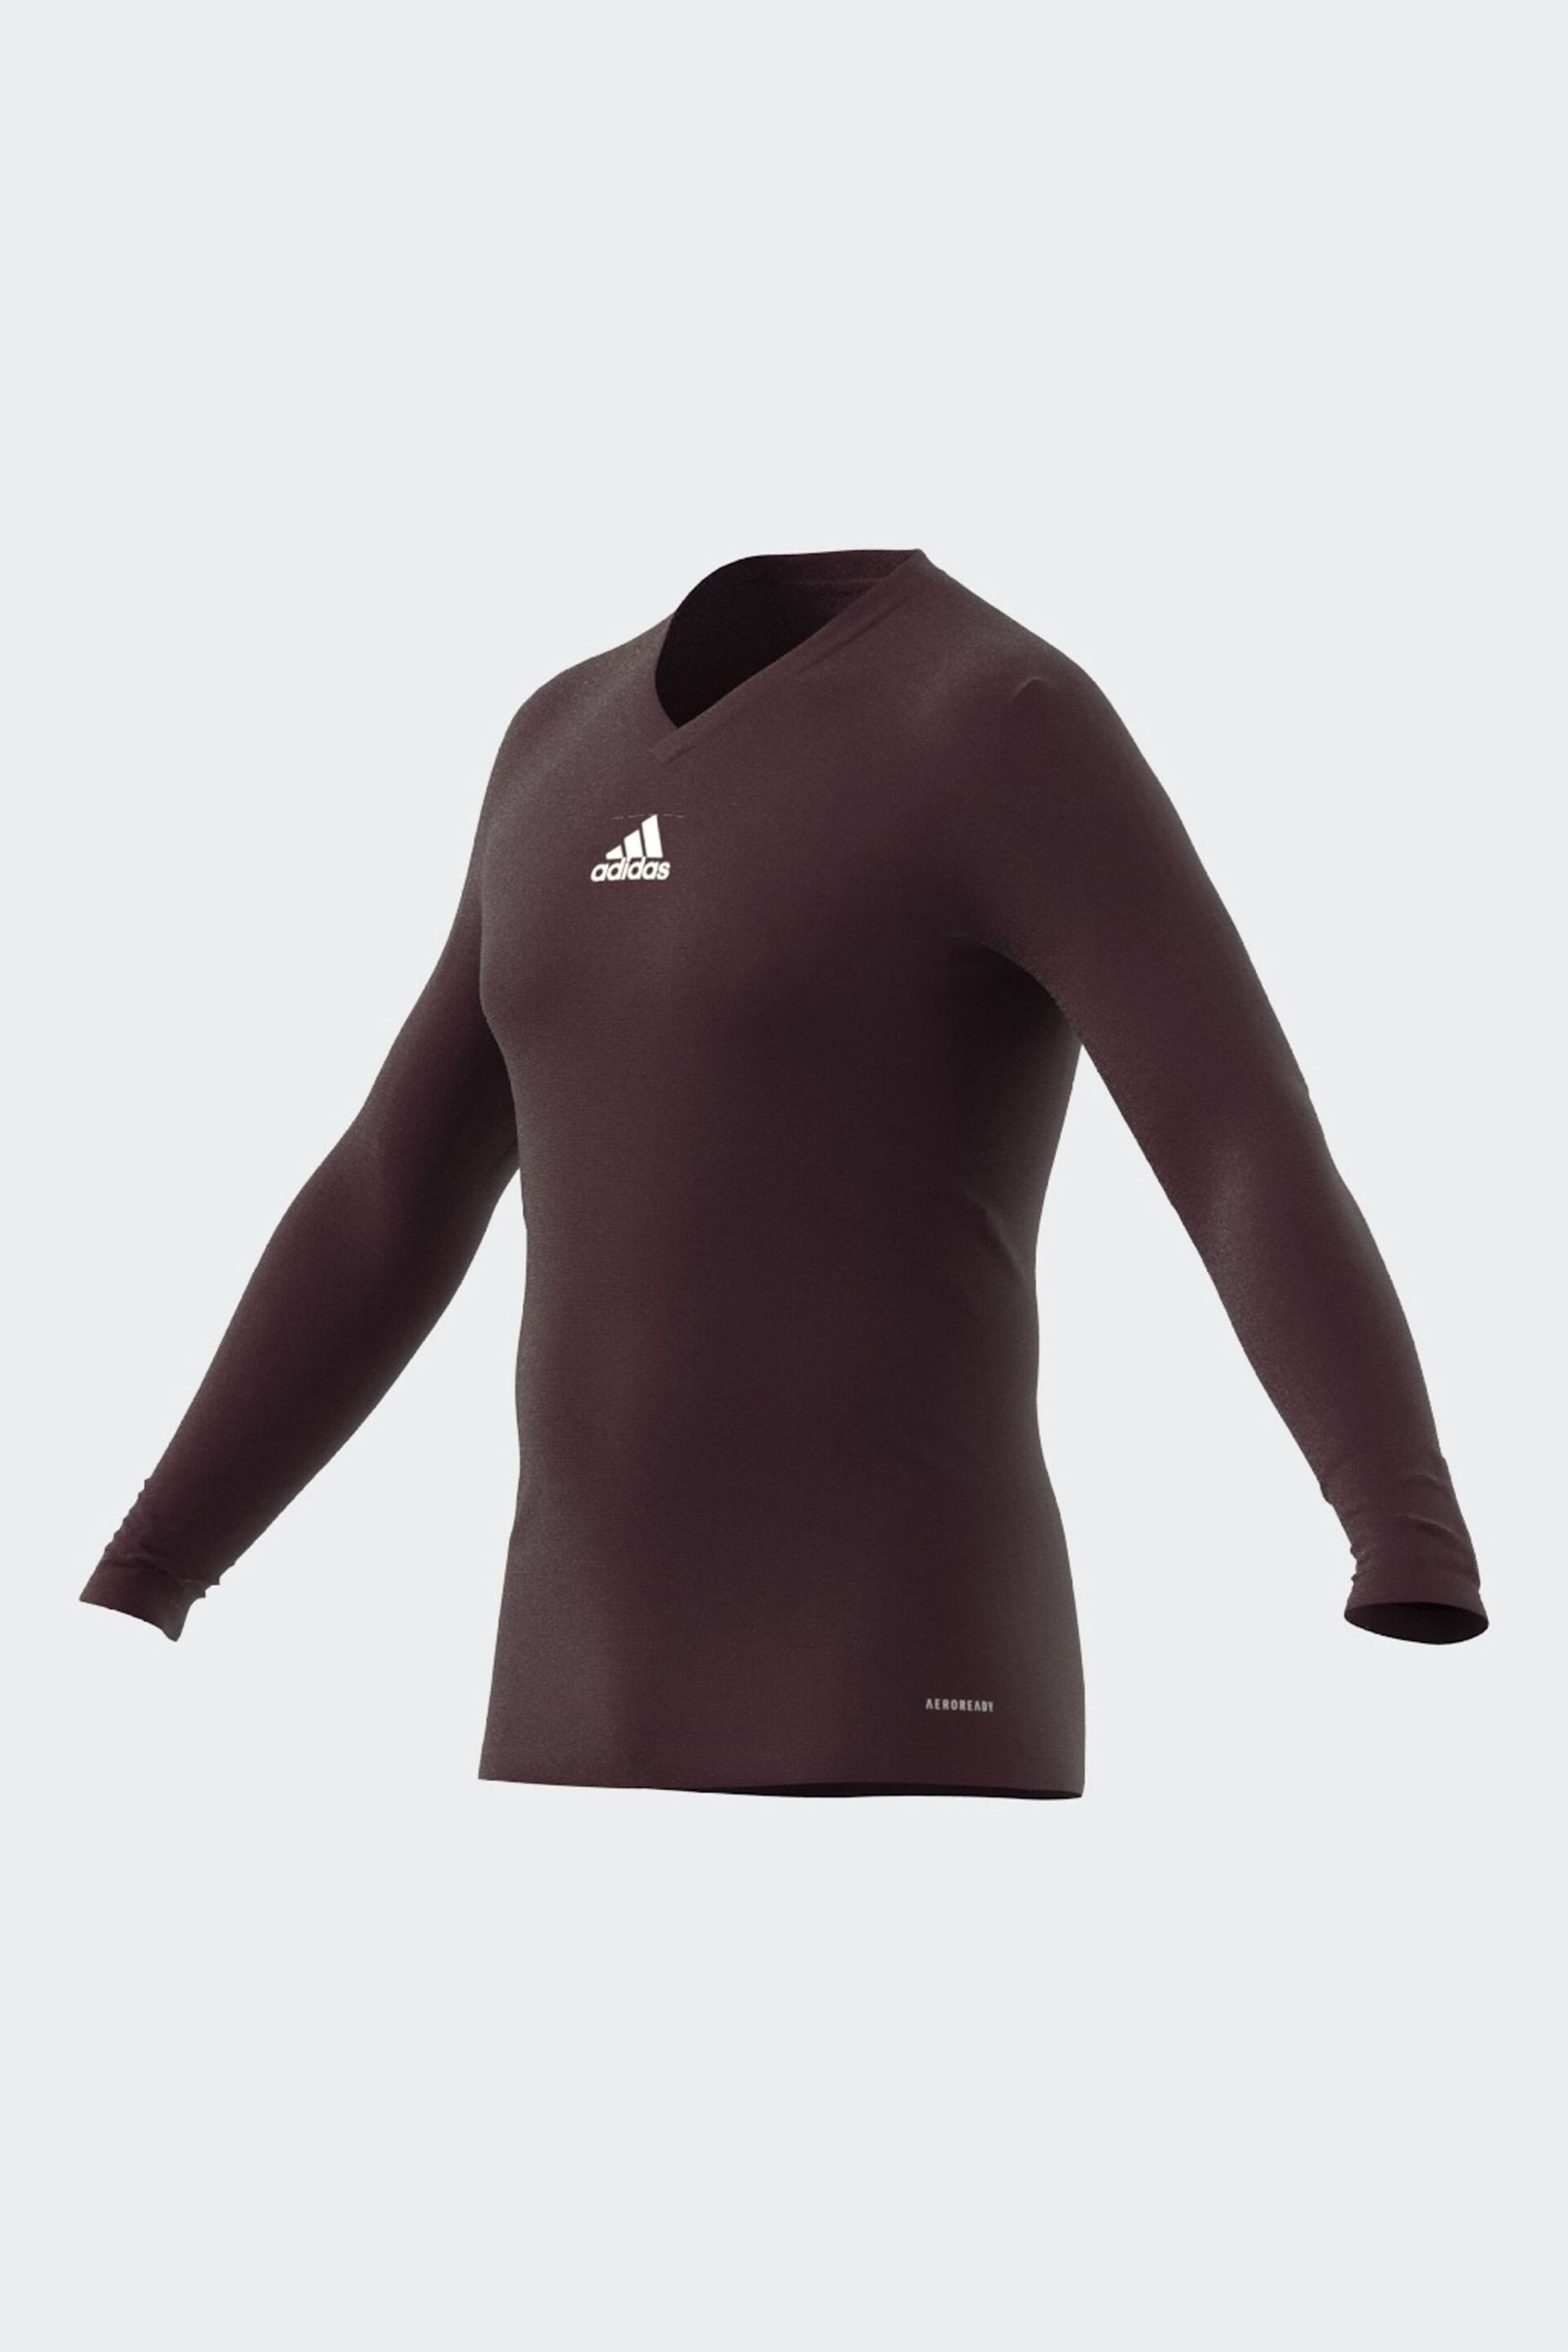 adidas Burgundy Teamwear Base Layer Long Sleeve Top - Image 3 of 4